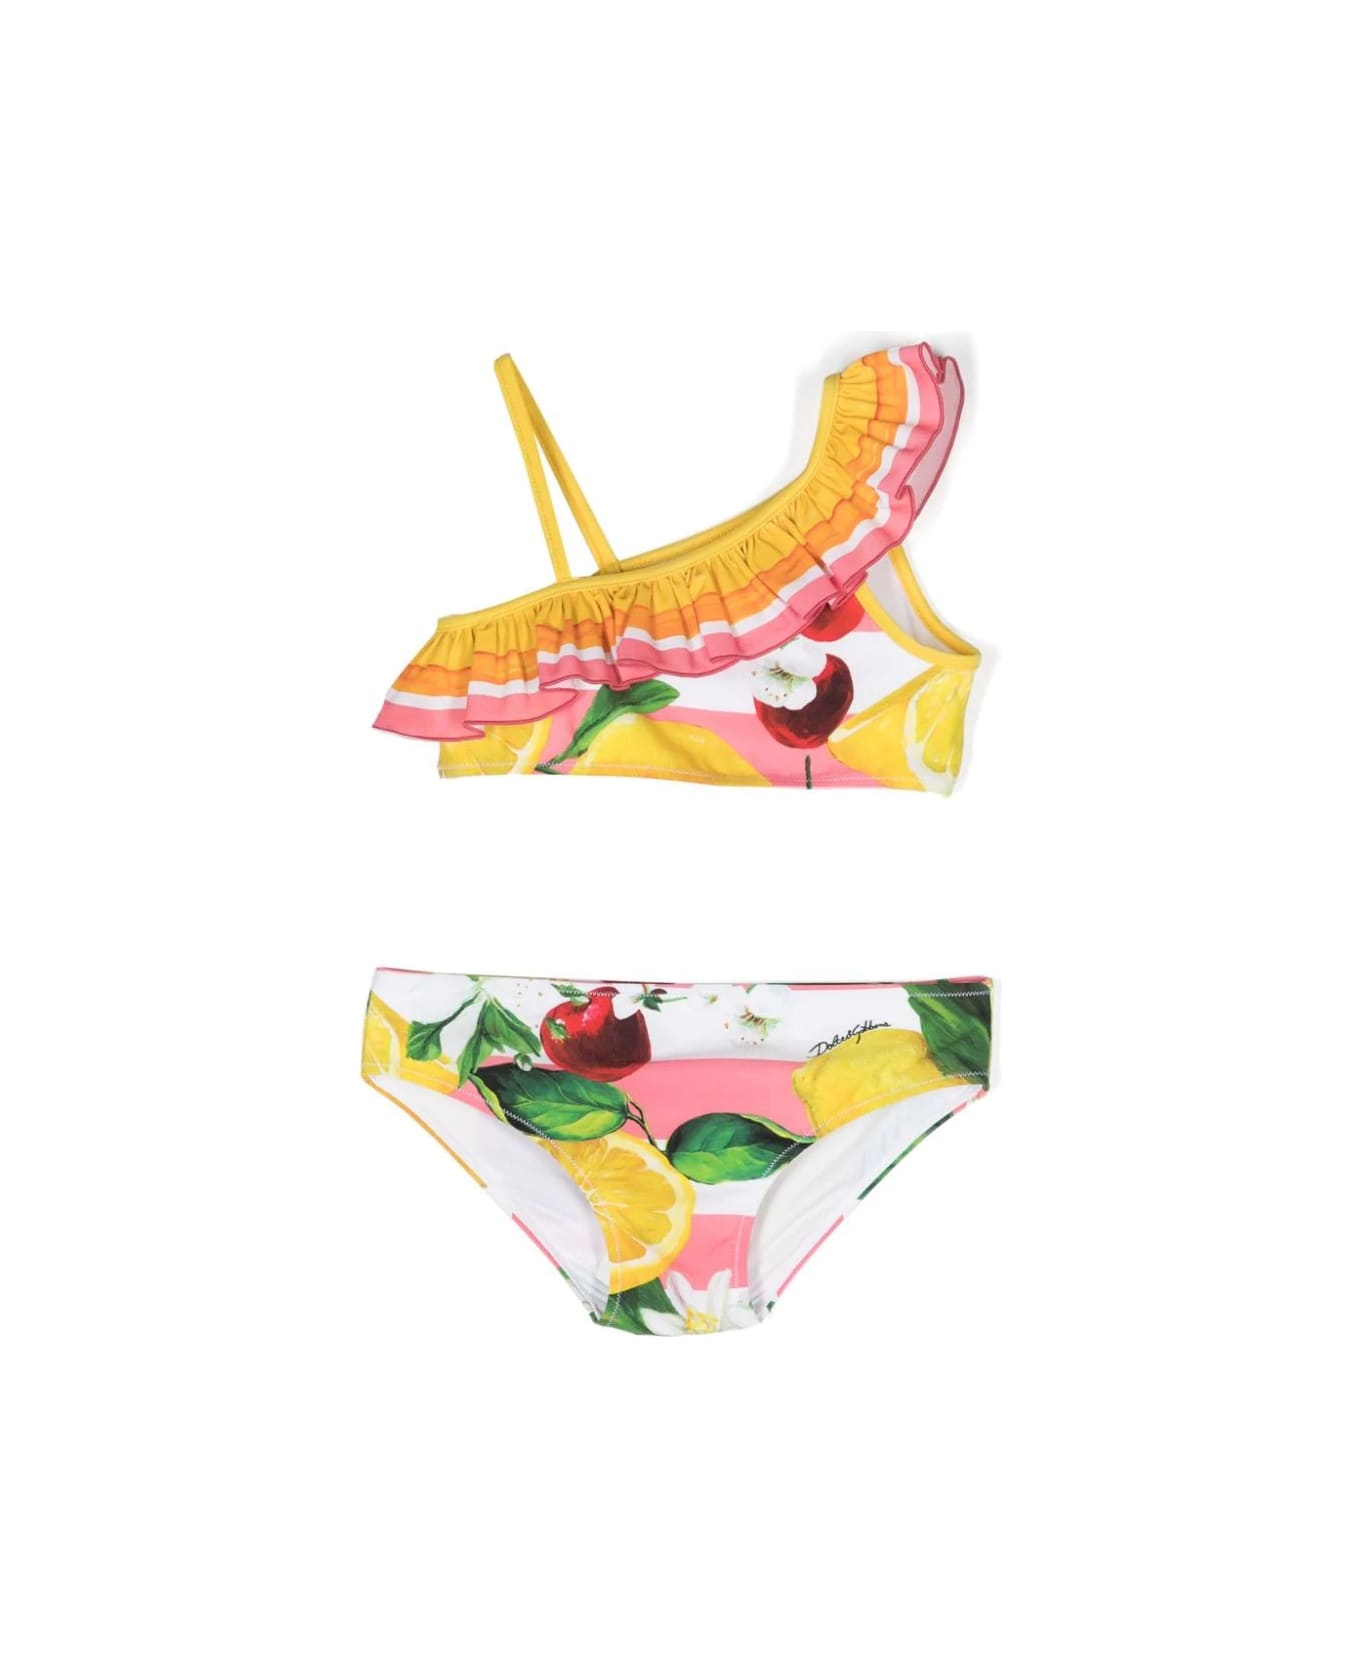 Dolce & Gabbana Stretch Fabric Bikini With Lemon And Cherry Print - Multicolour